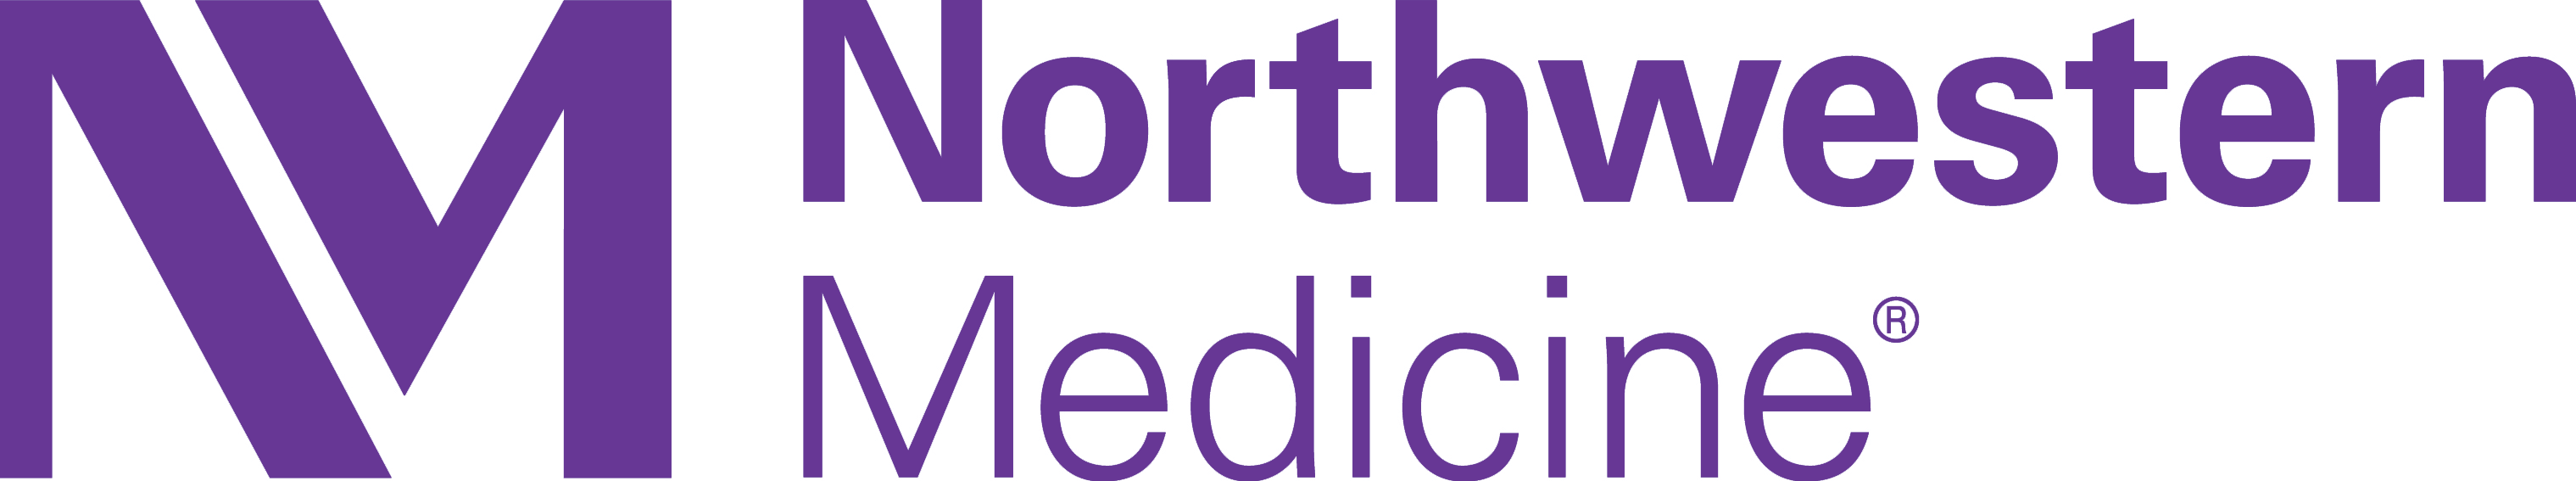 Northwestern Logo - Northwestern Medicine Logo